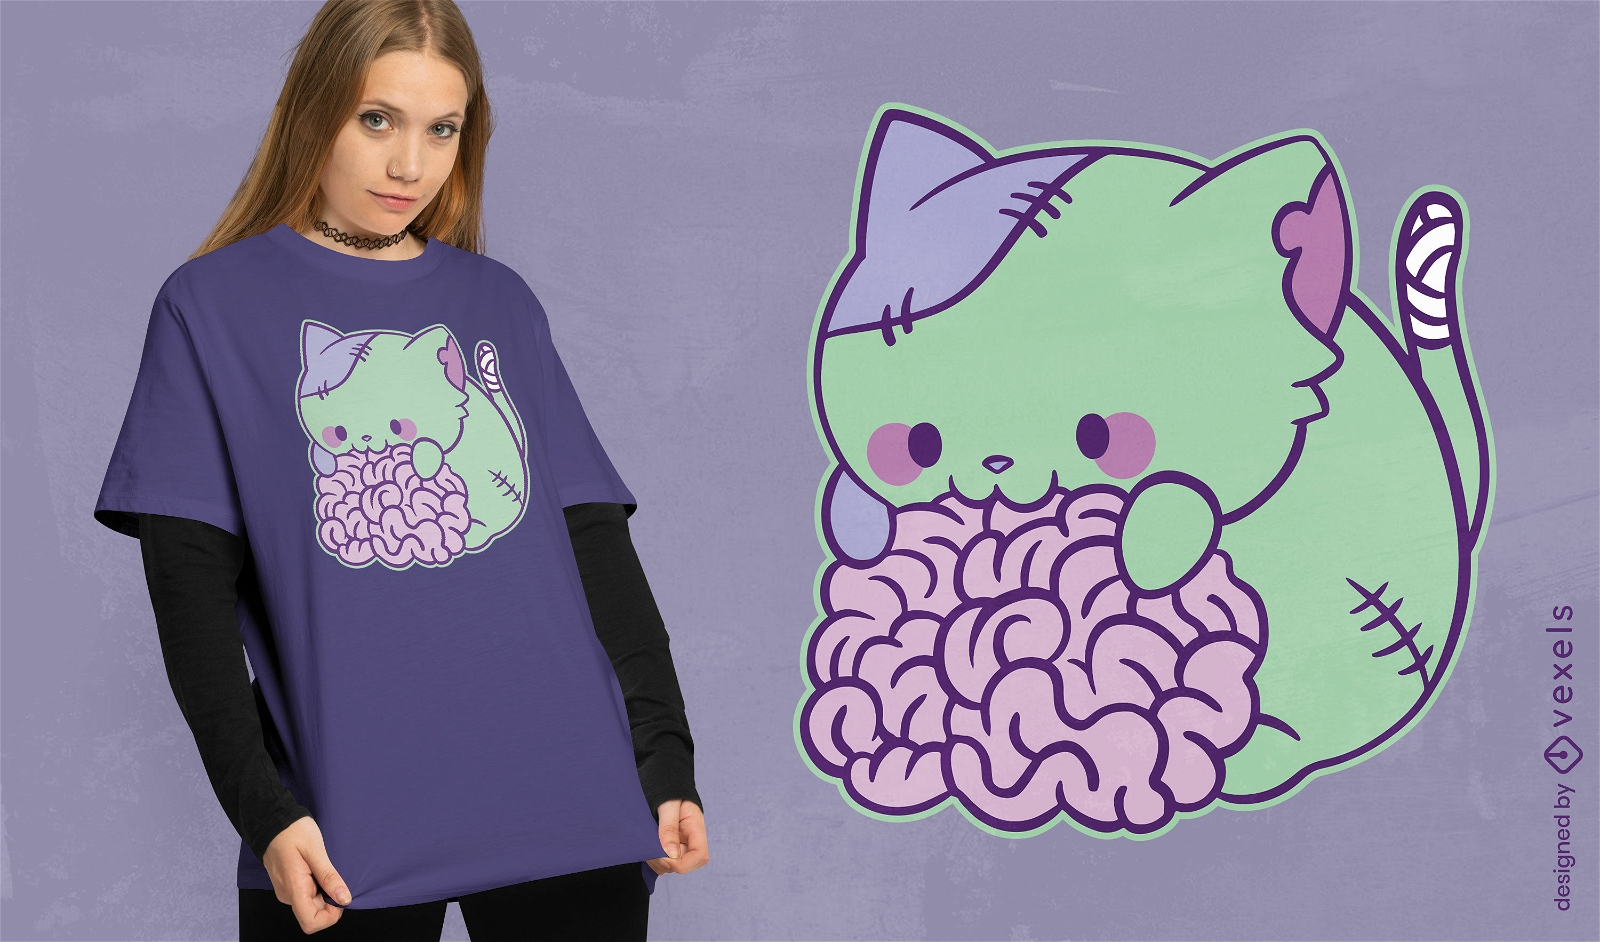 Dise?o de camiseta de gato zombie comiendo cerebro.